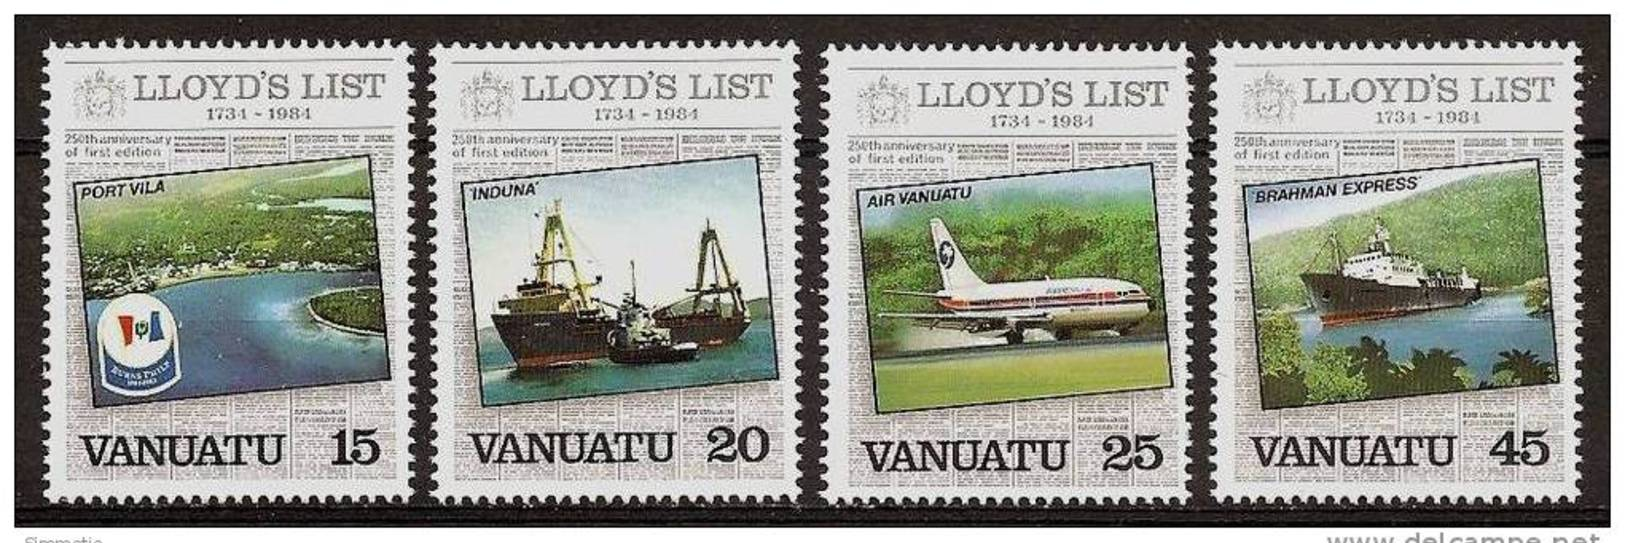 VANUATU 1984 - LLOYD'S LIST / Shipping News Journal / Ships Planes 4v - Mi 674-77 MNH ** Cv€1,80 V024 - Vanuatu (1980-...)